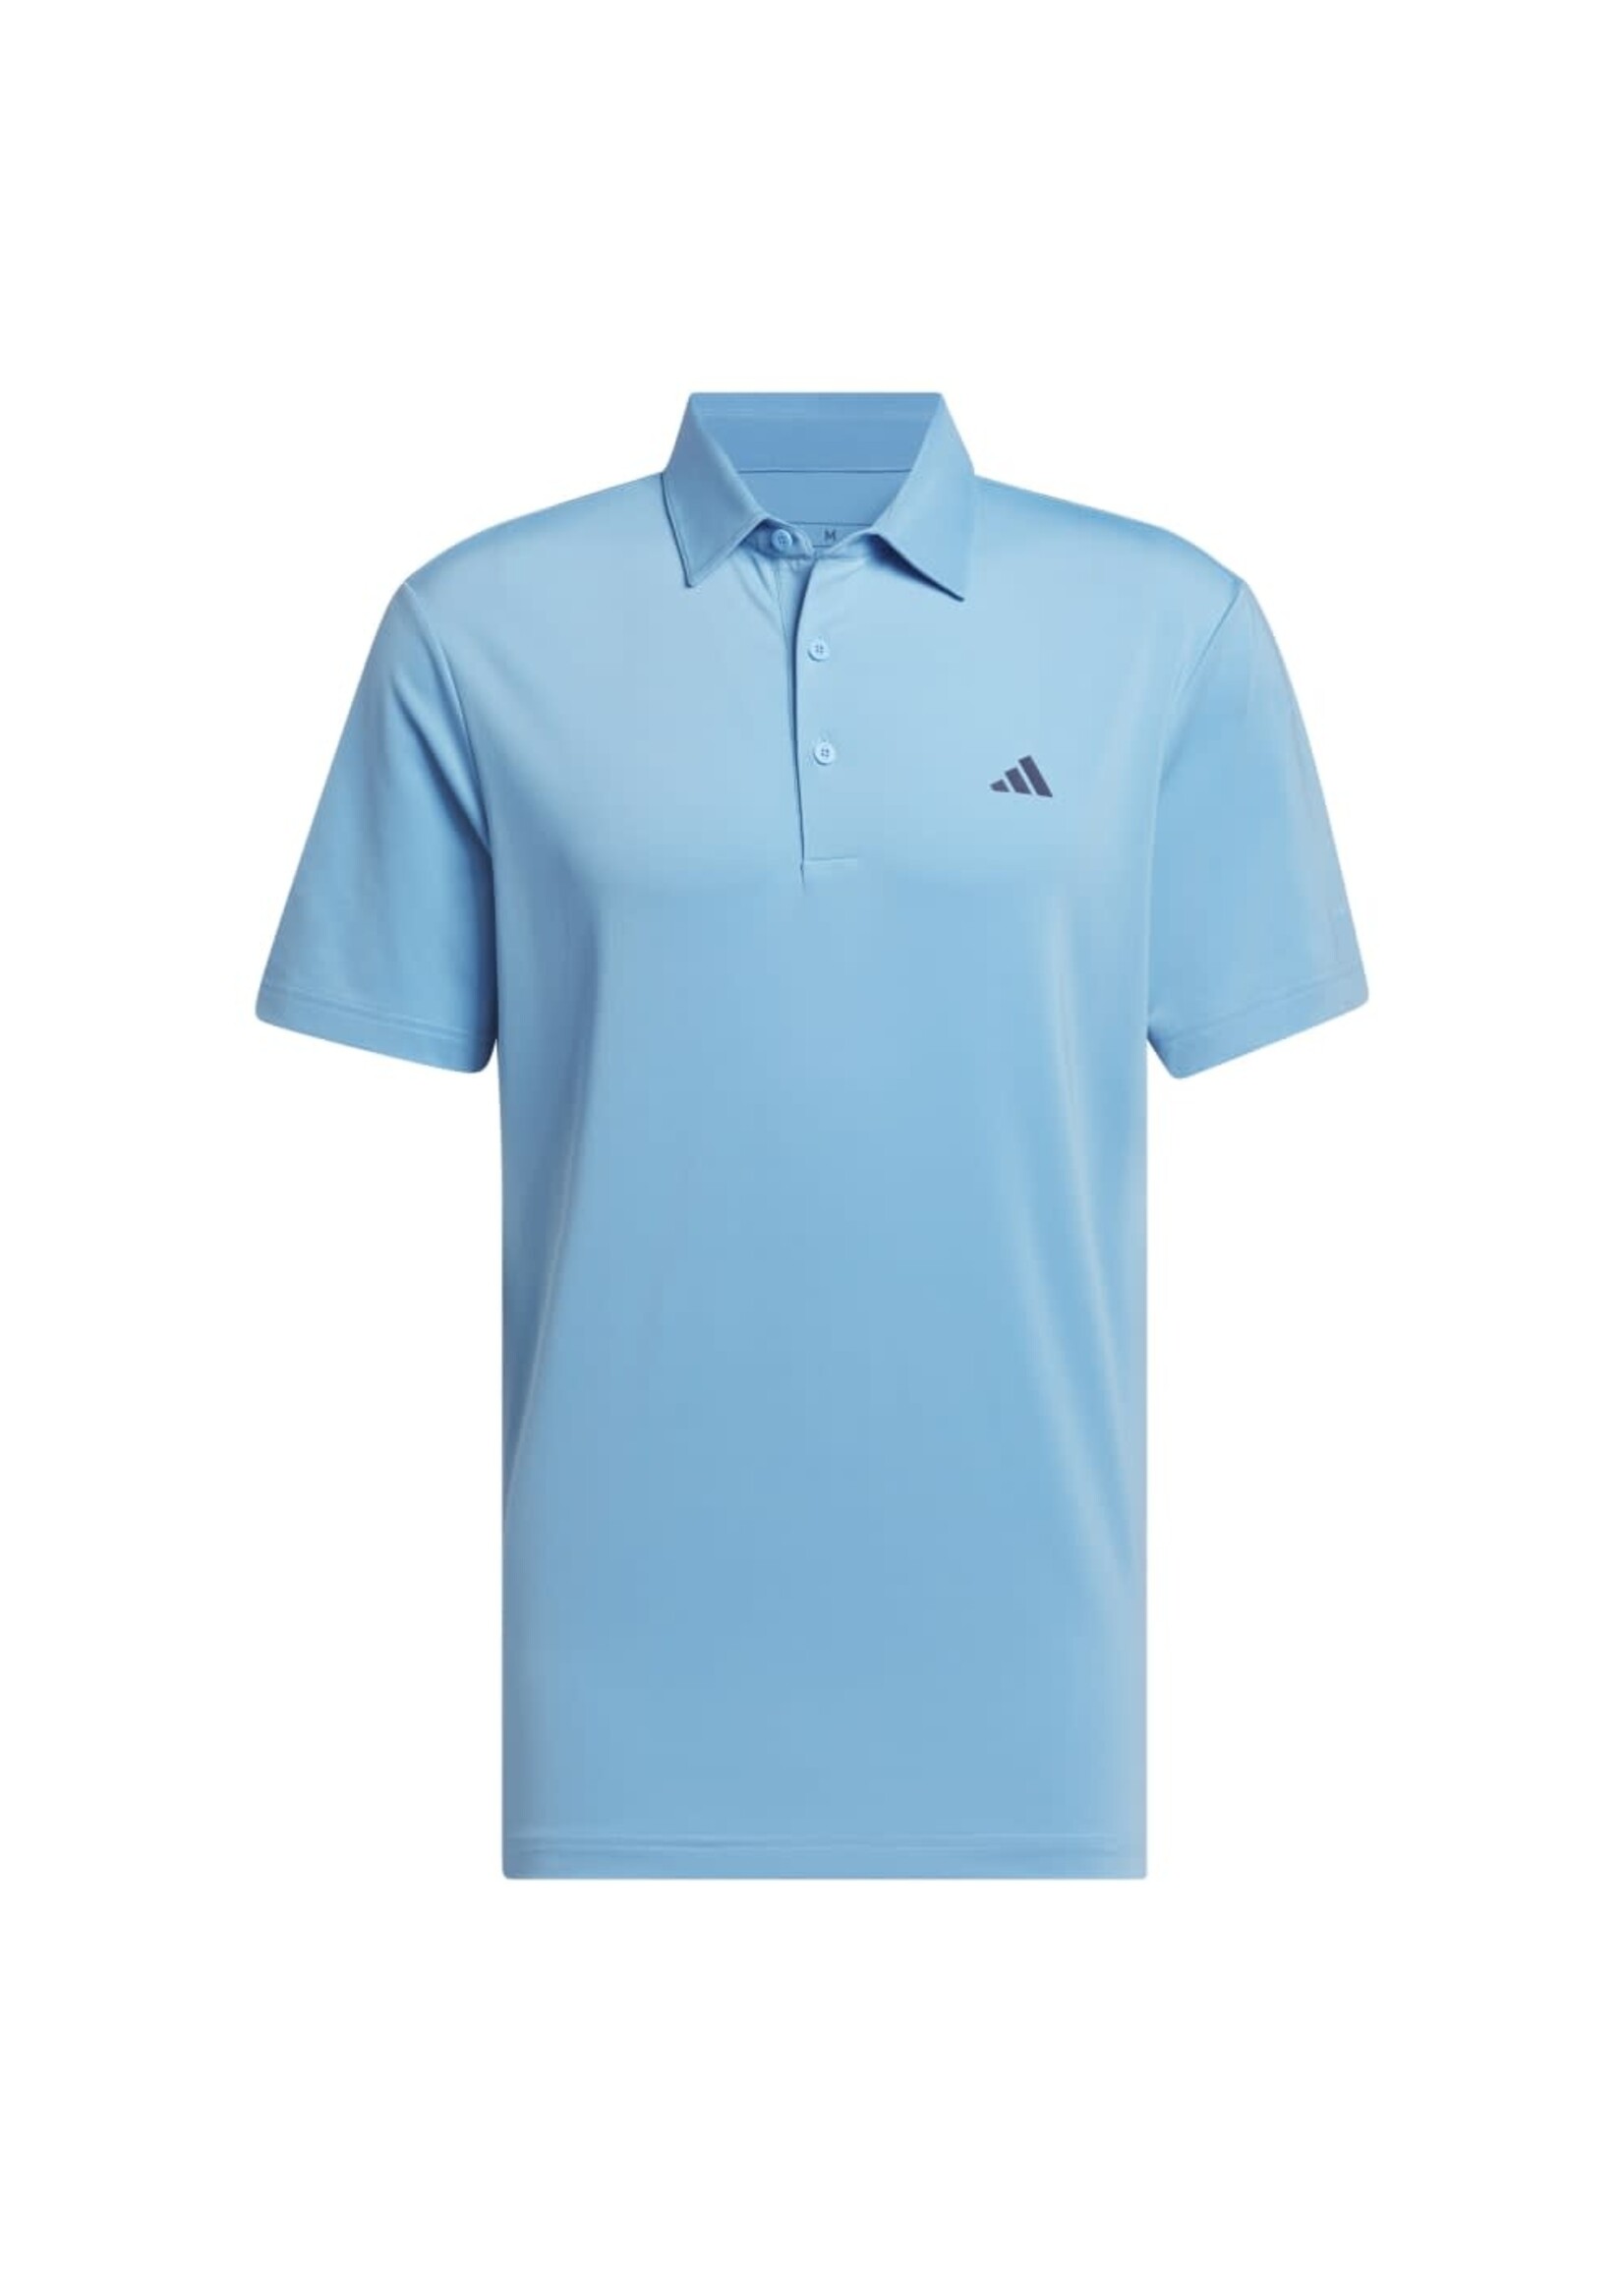 Adidas Adidas Ultimate365 Solid Mens Golf Polo Shirt